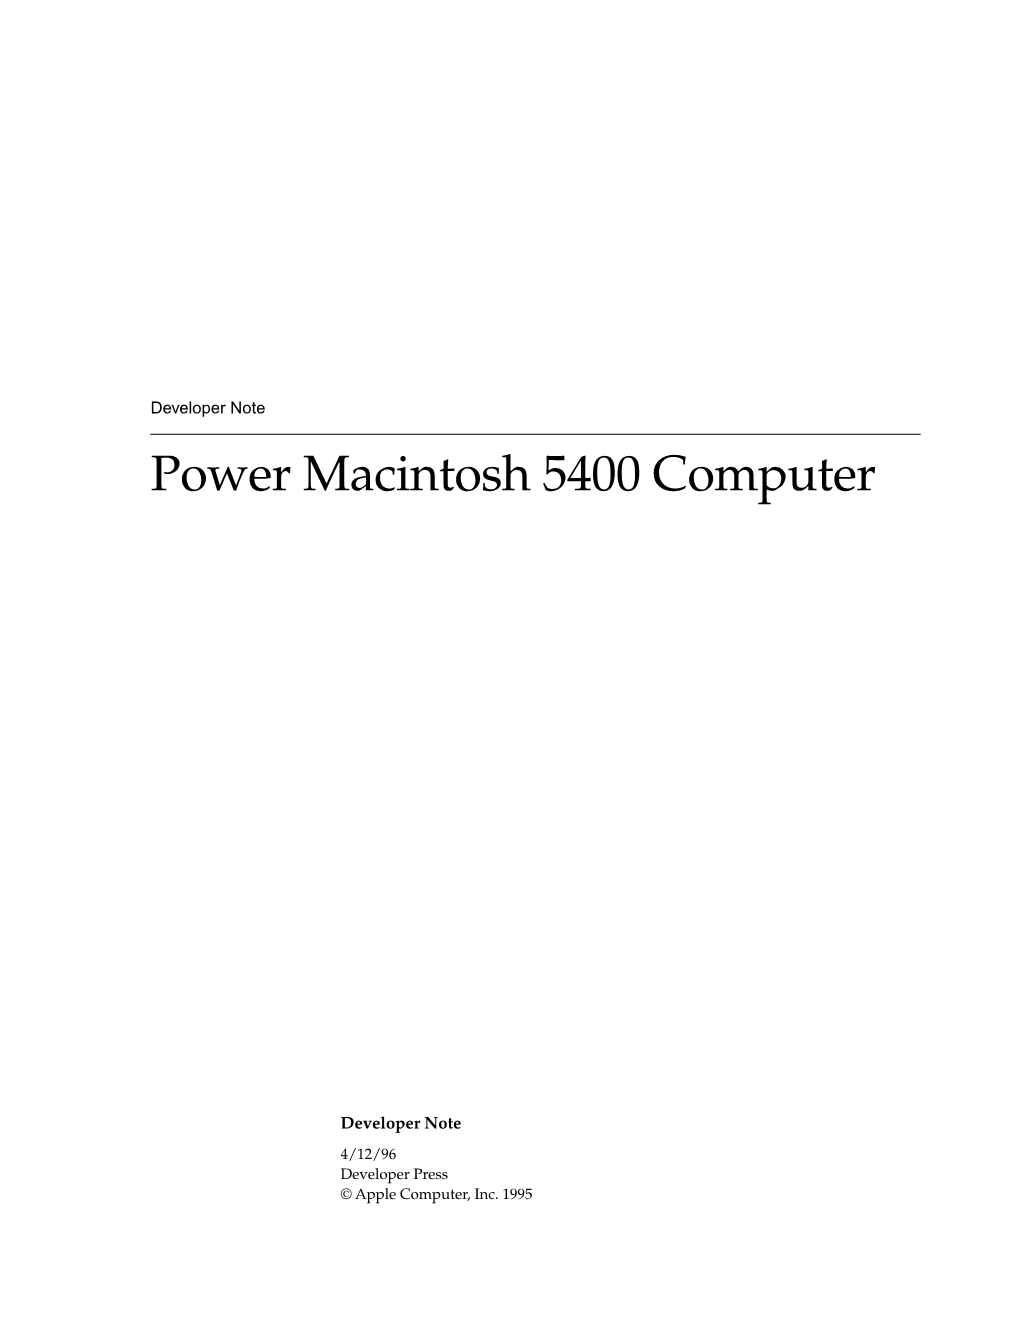 Power Macintosh 5400 Computer Developer Note